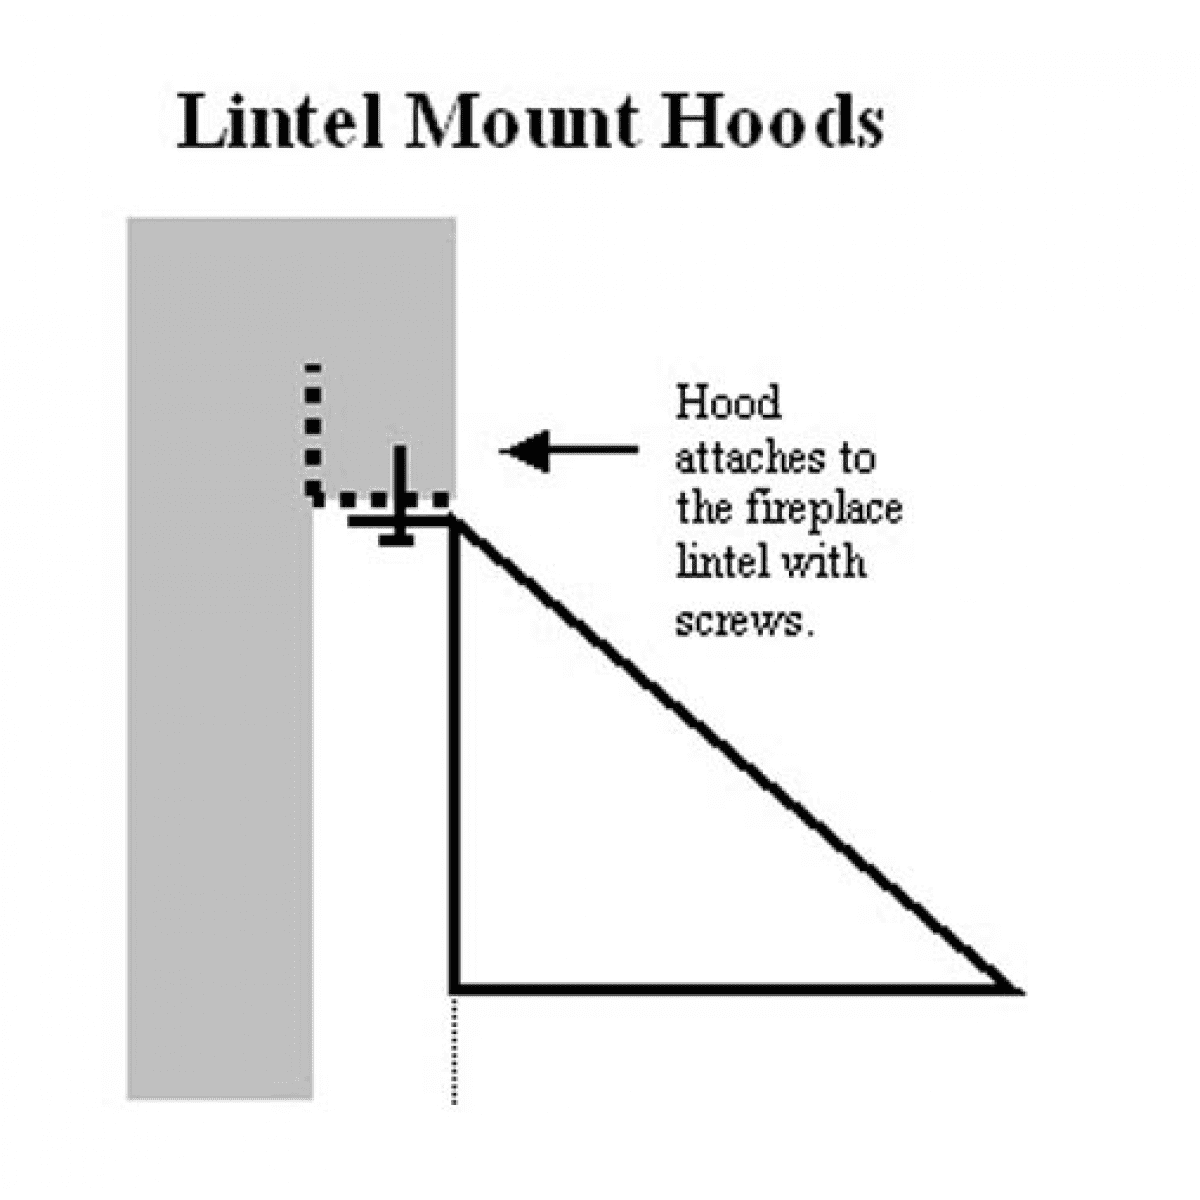 Lintel Mount